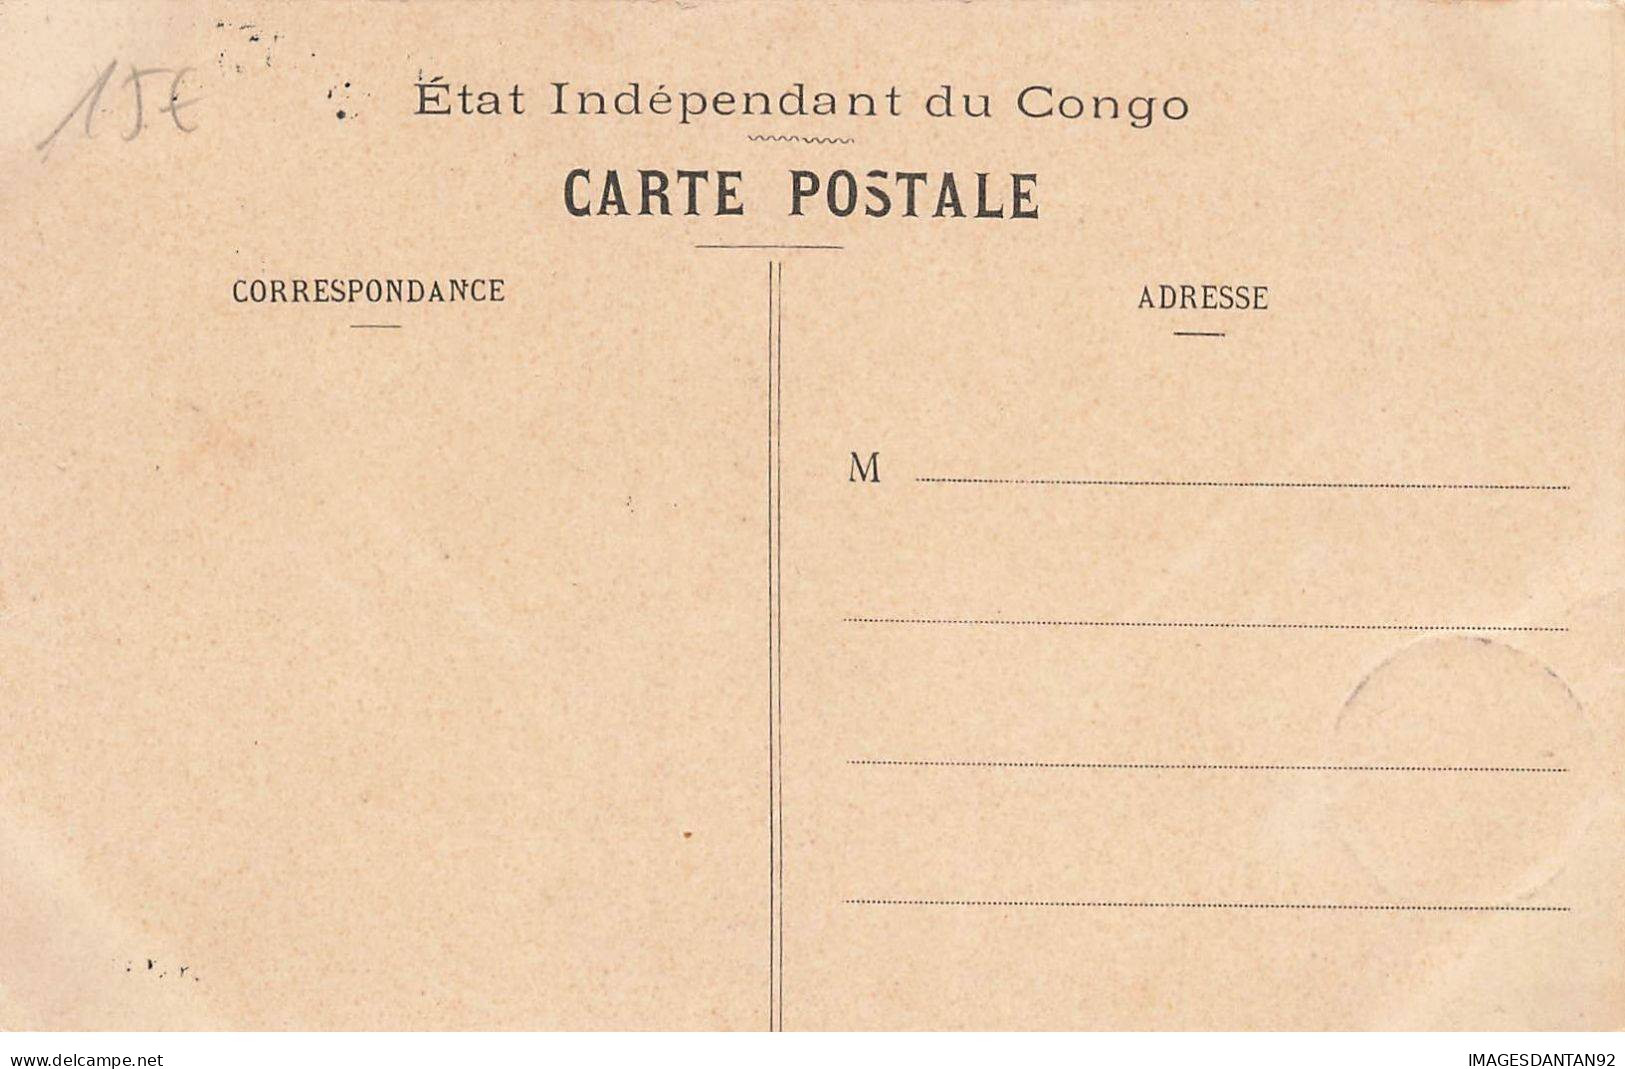 CONGO AL#AL00335 FEMME MAKELE ARUWIMI TYPES COIFFURE - Belgisch-Congo